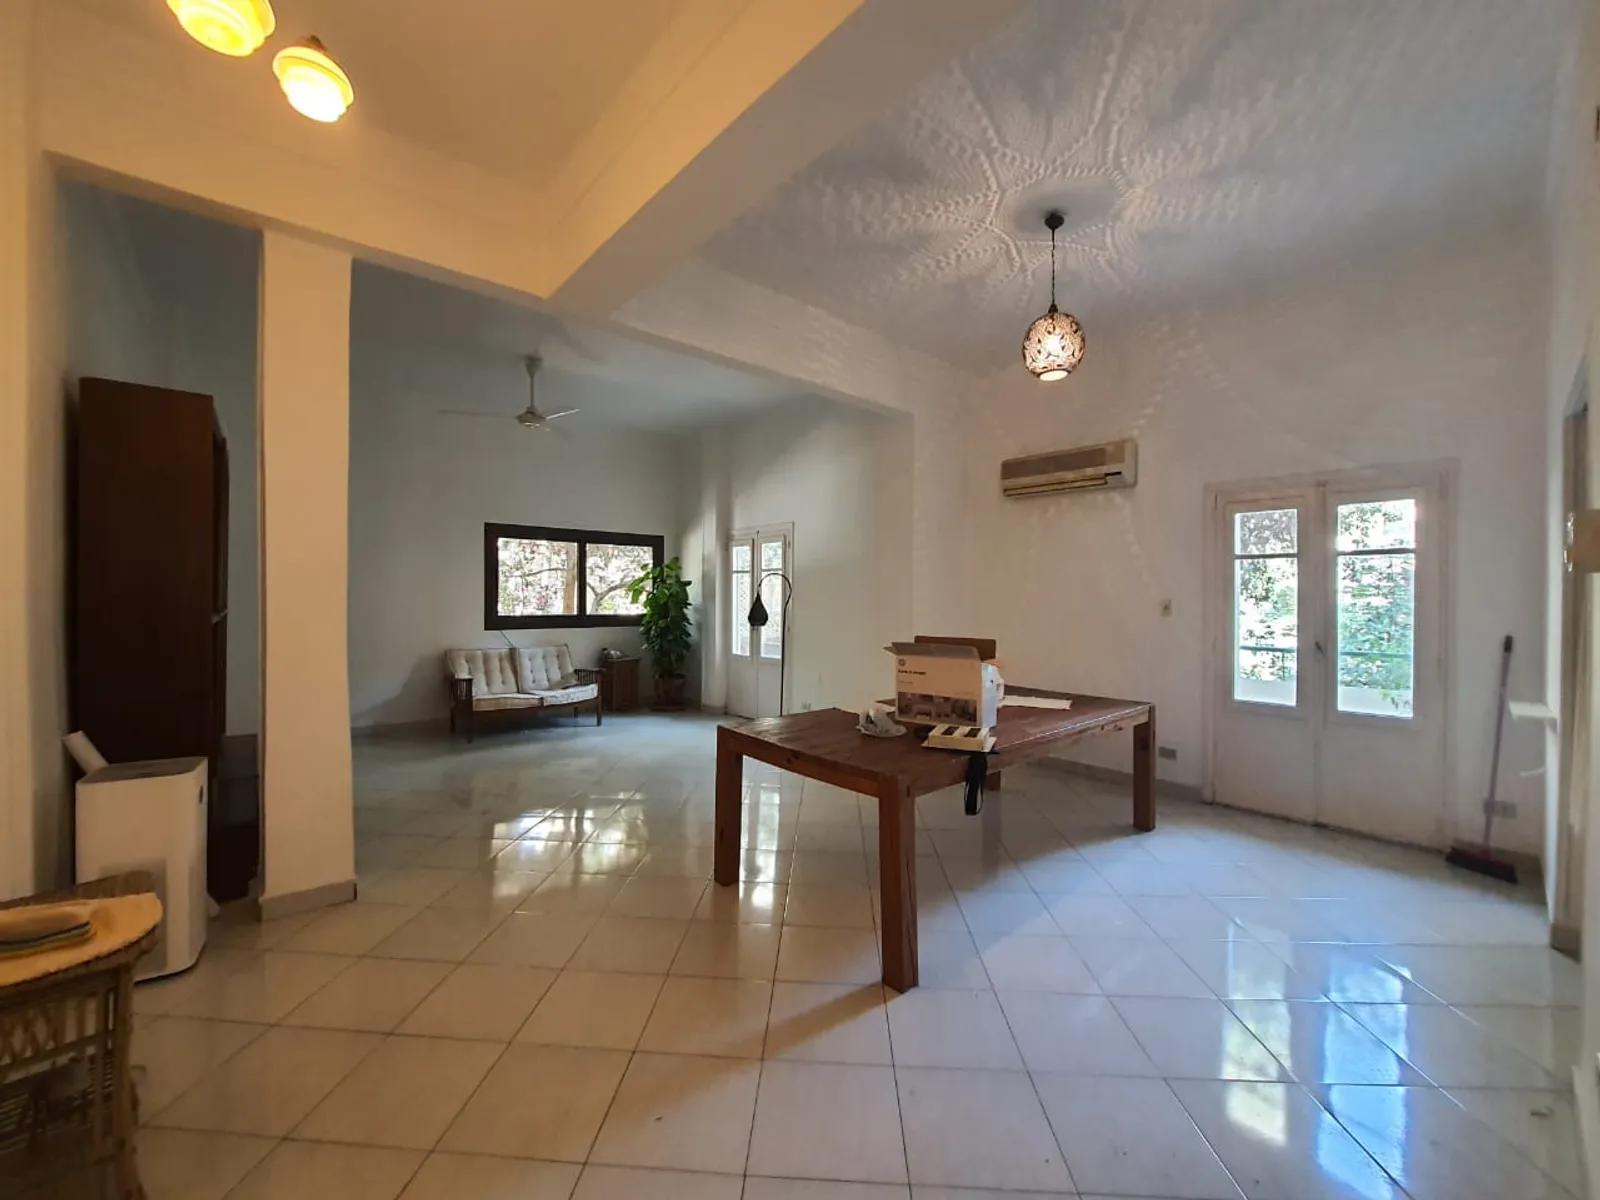 Apartments For Sale In Maadi Maadi Sarayat Area: 200 m² consists of 3 Bedrooms 2 Bathrooms Furnished 5 stars #5362